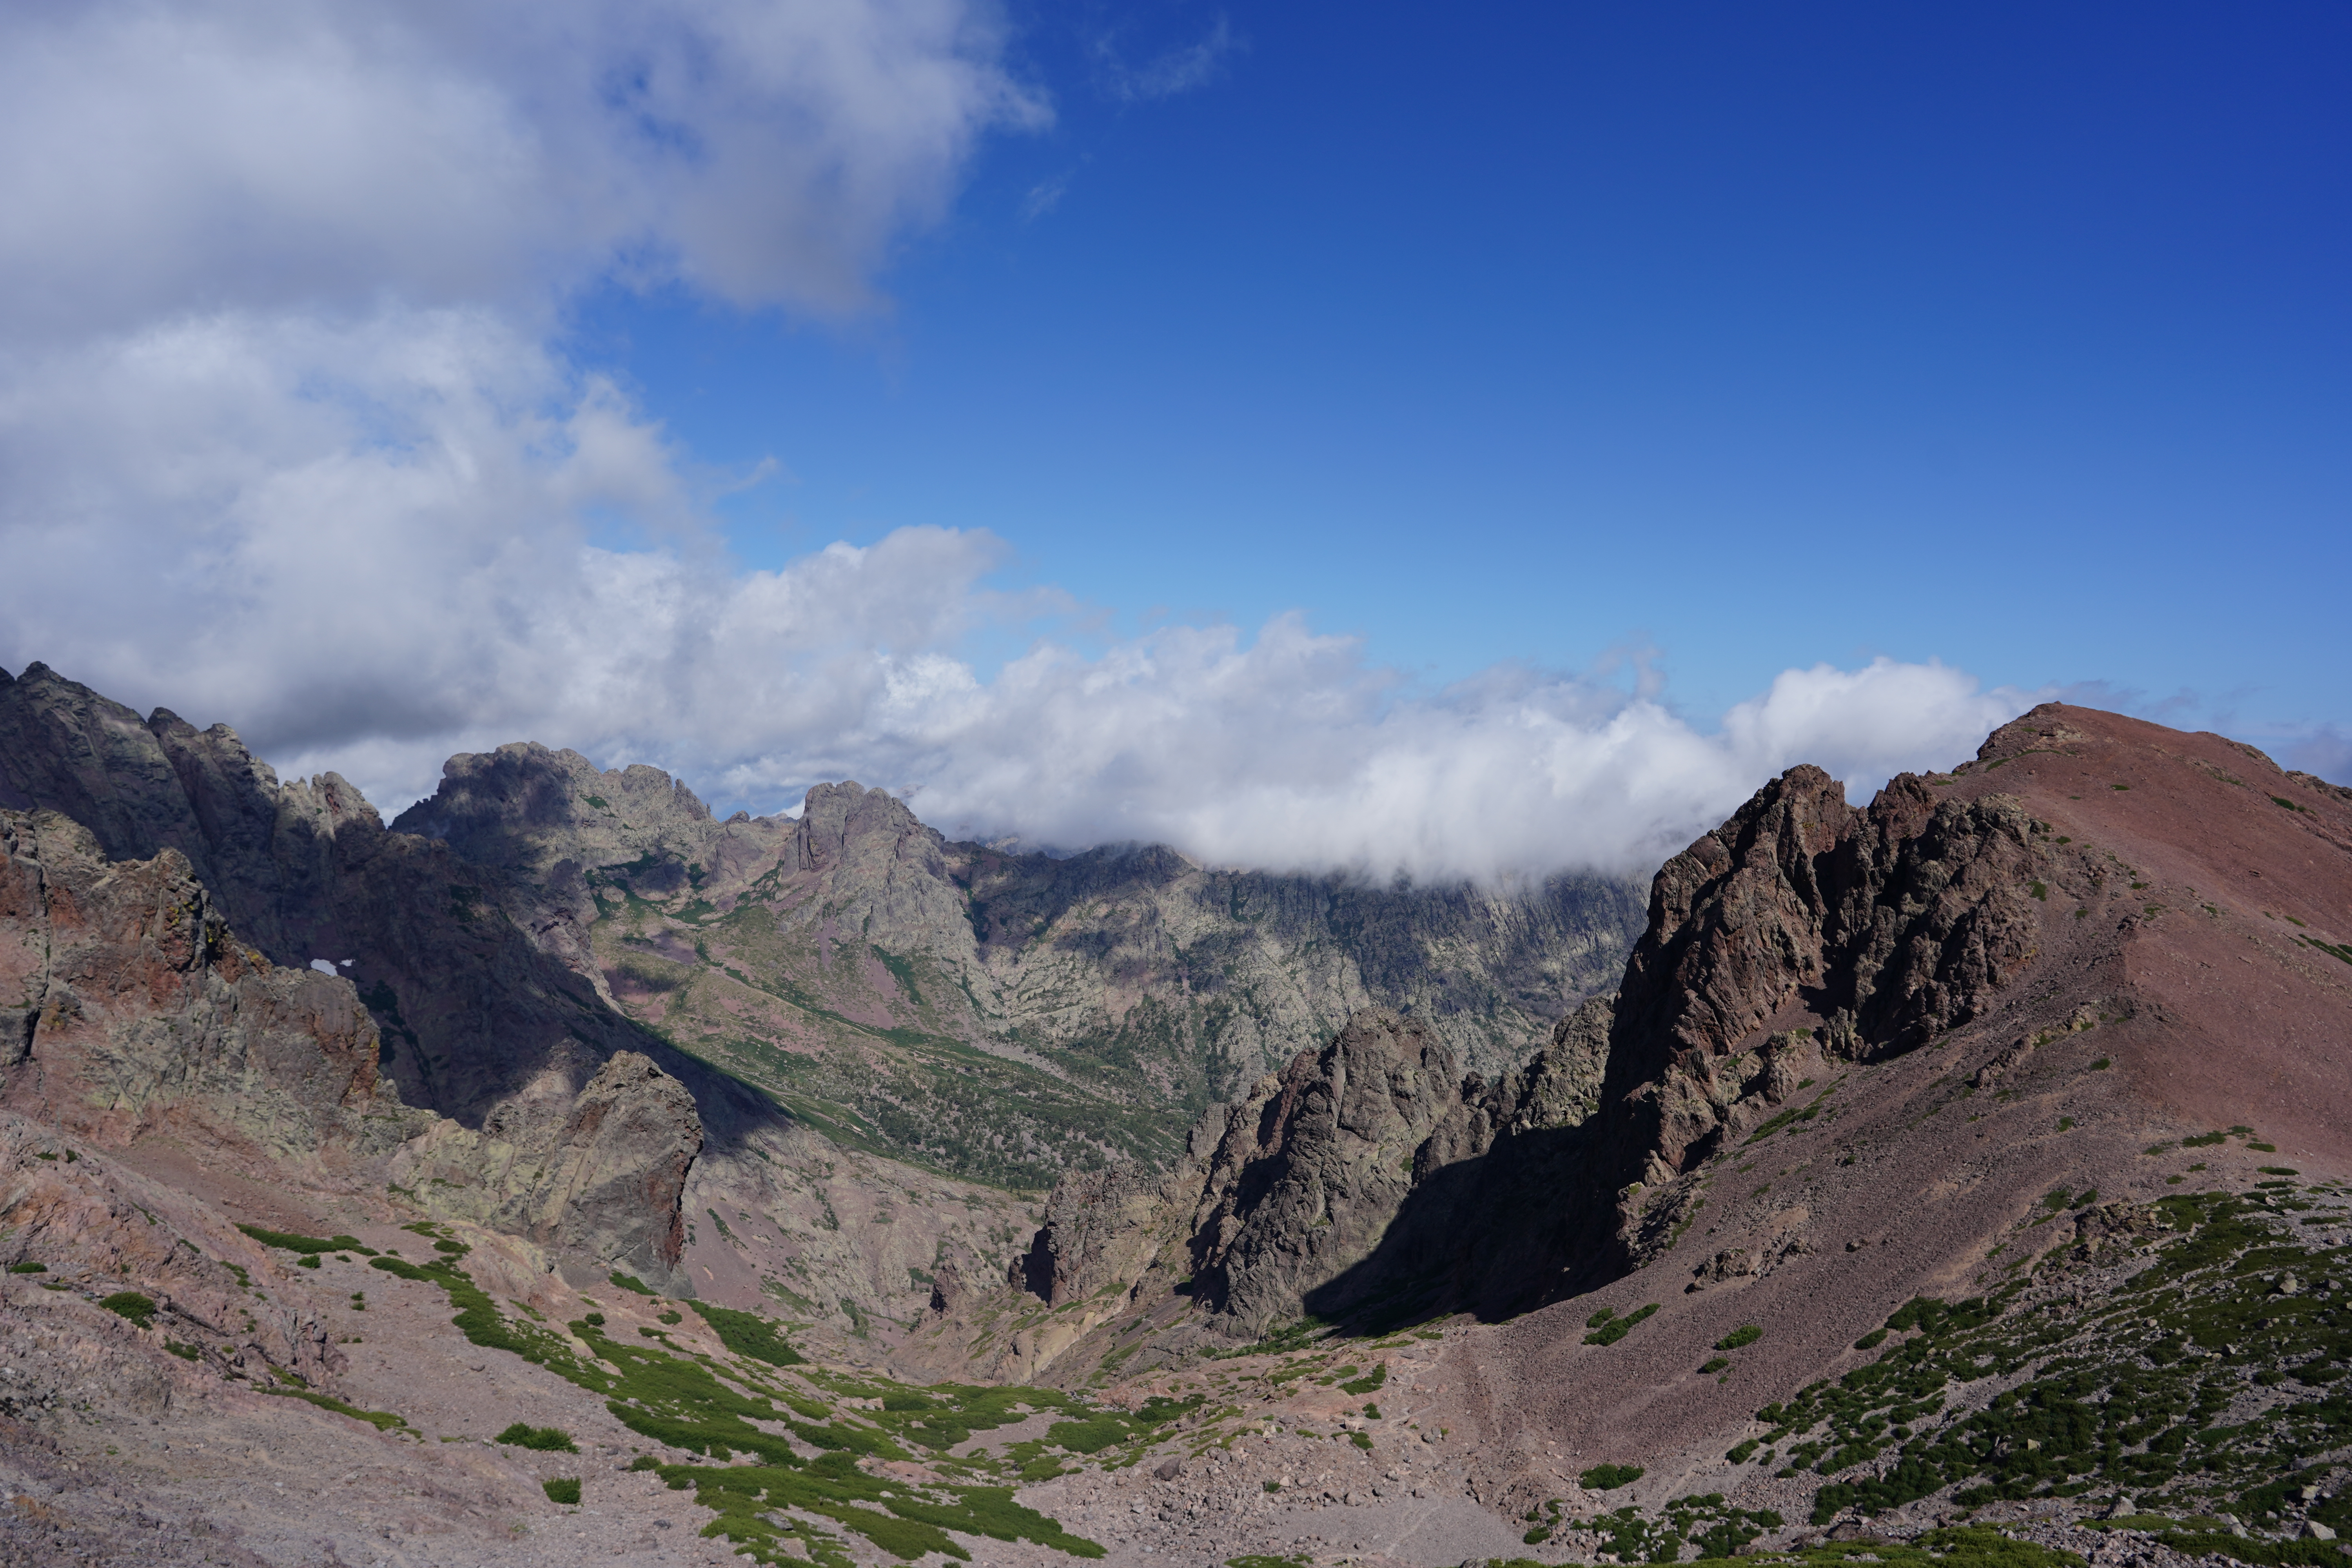 A view of the mountain range near Mount Cinto